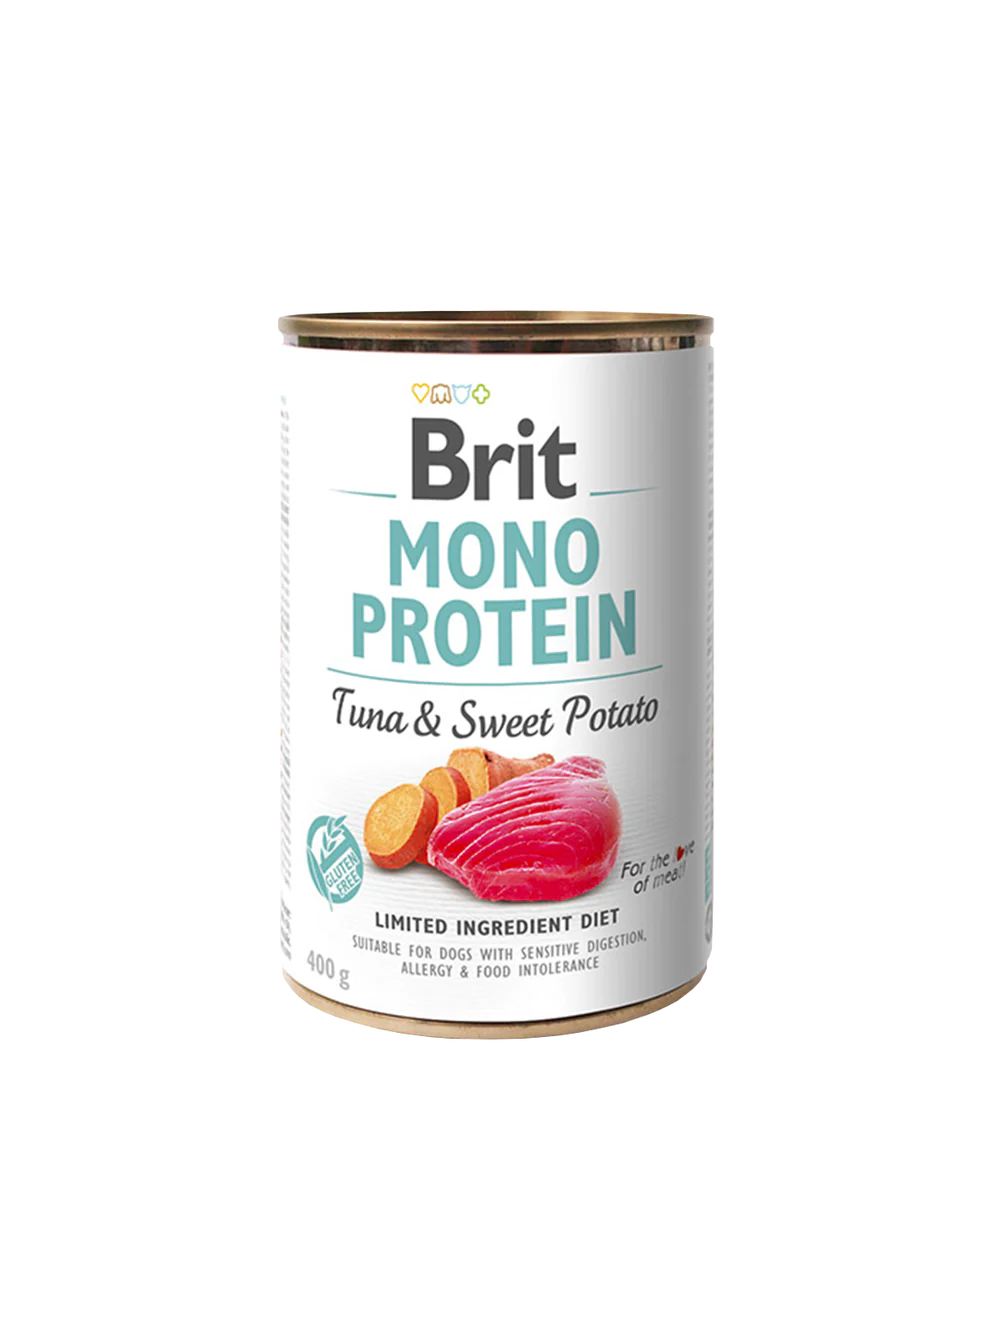 Brit Mono Protein Tuna & Sweet Potato 6 pack of 400g